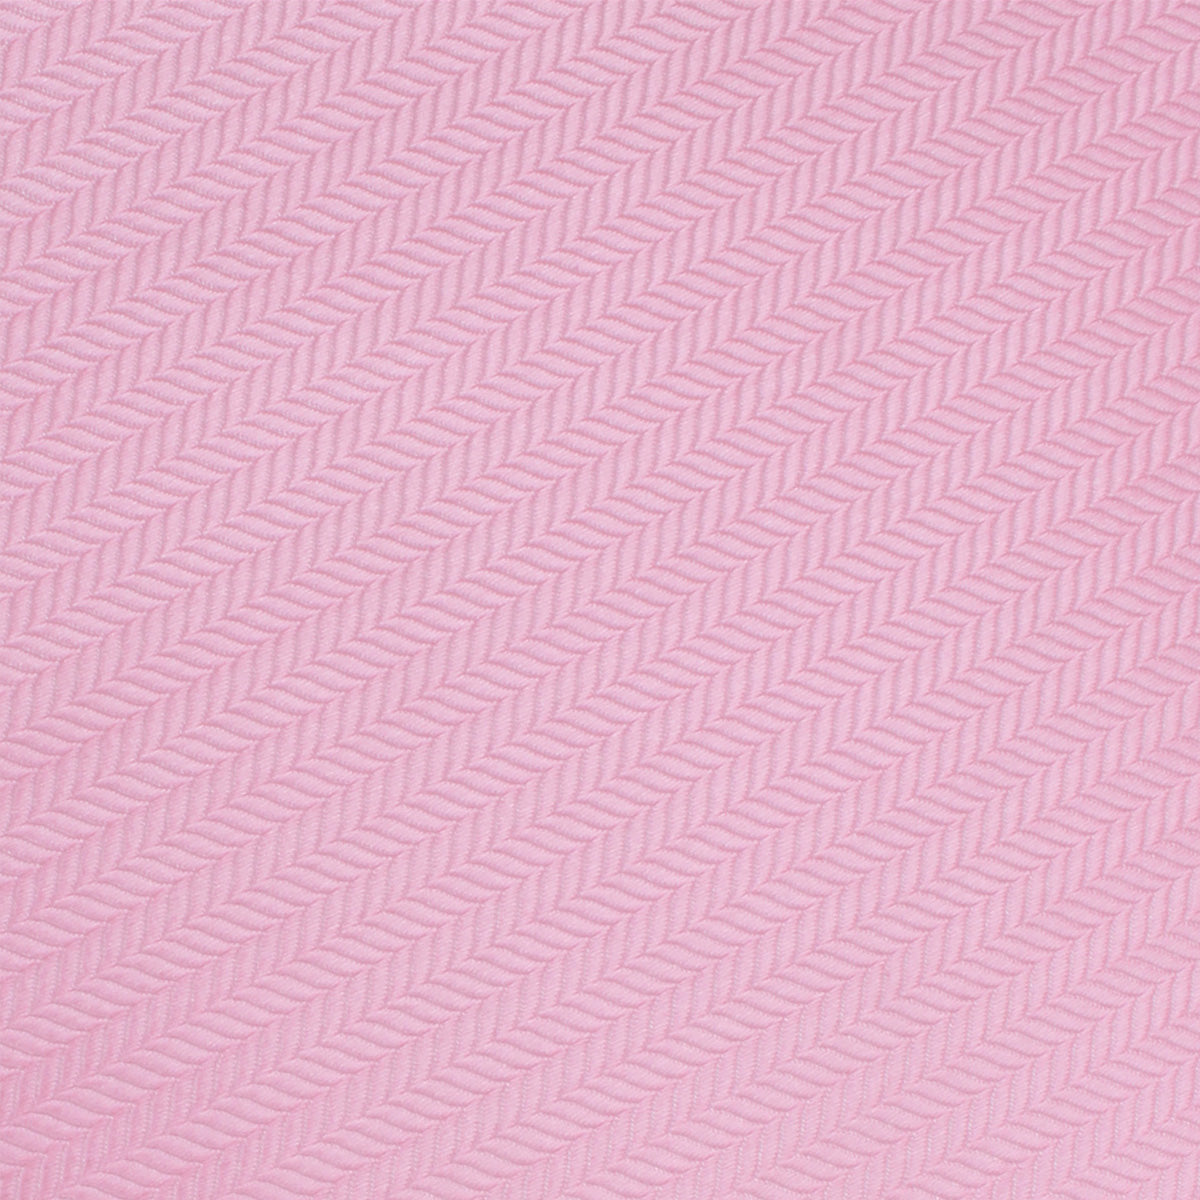 Tickled Pink Herringbone Chevron Necktie Fabric